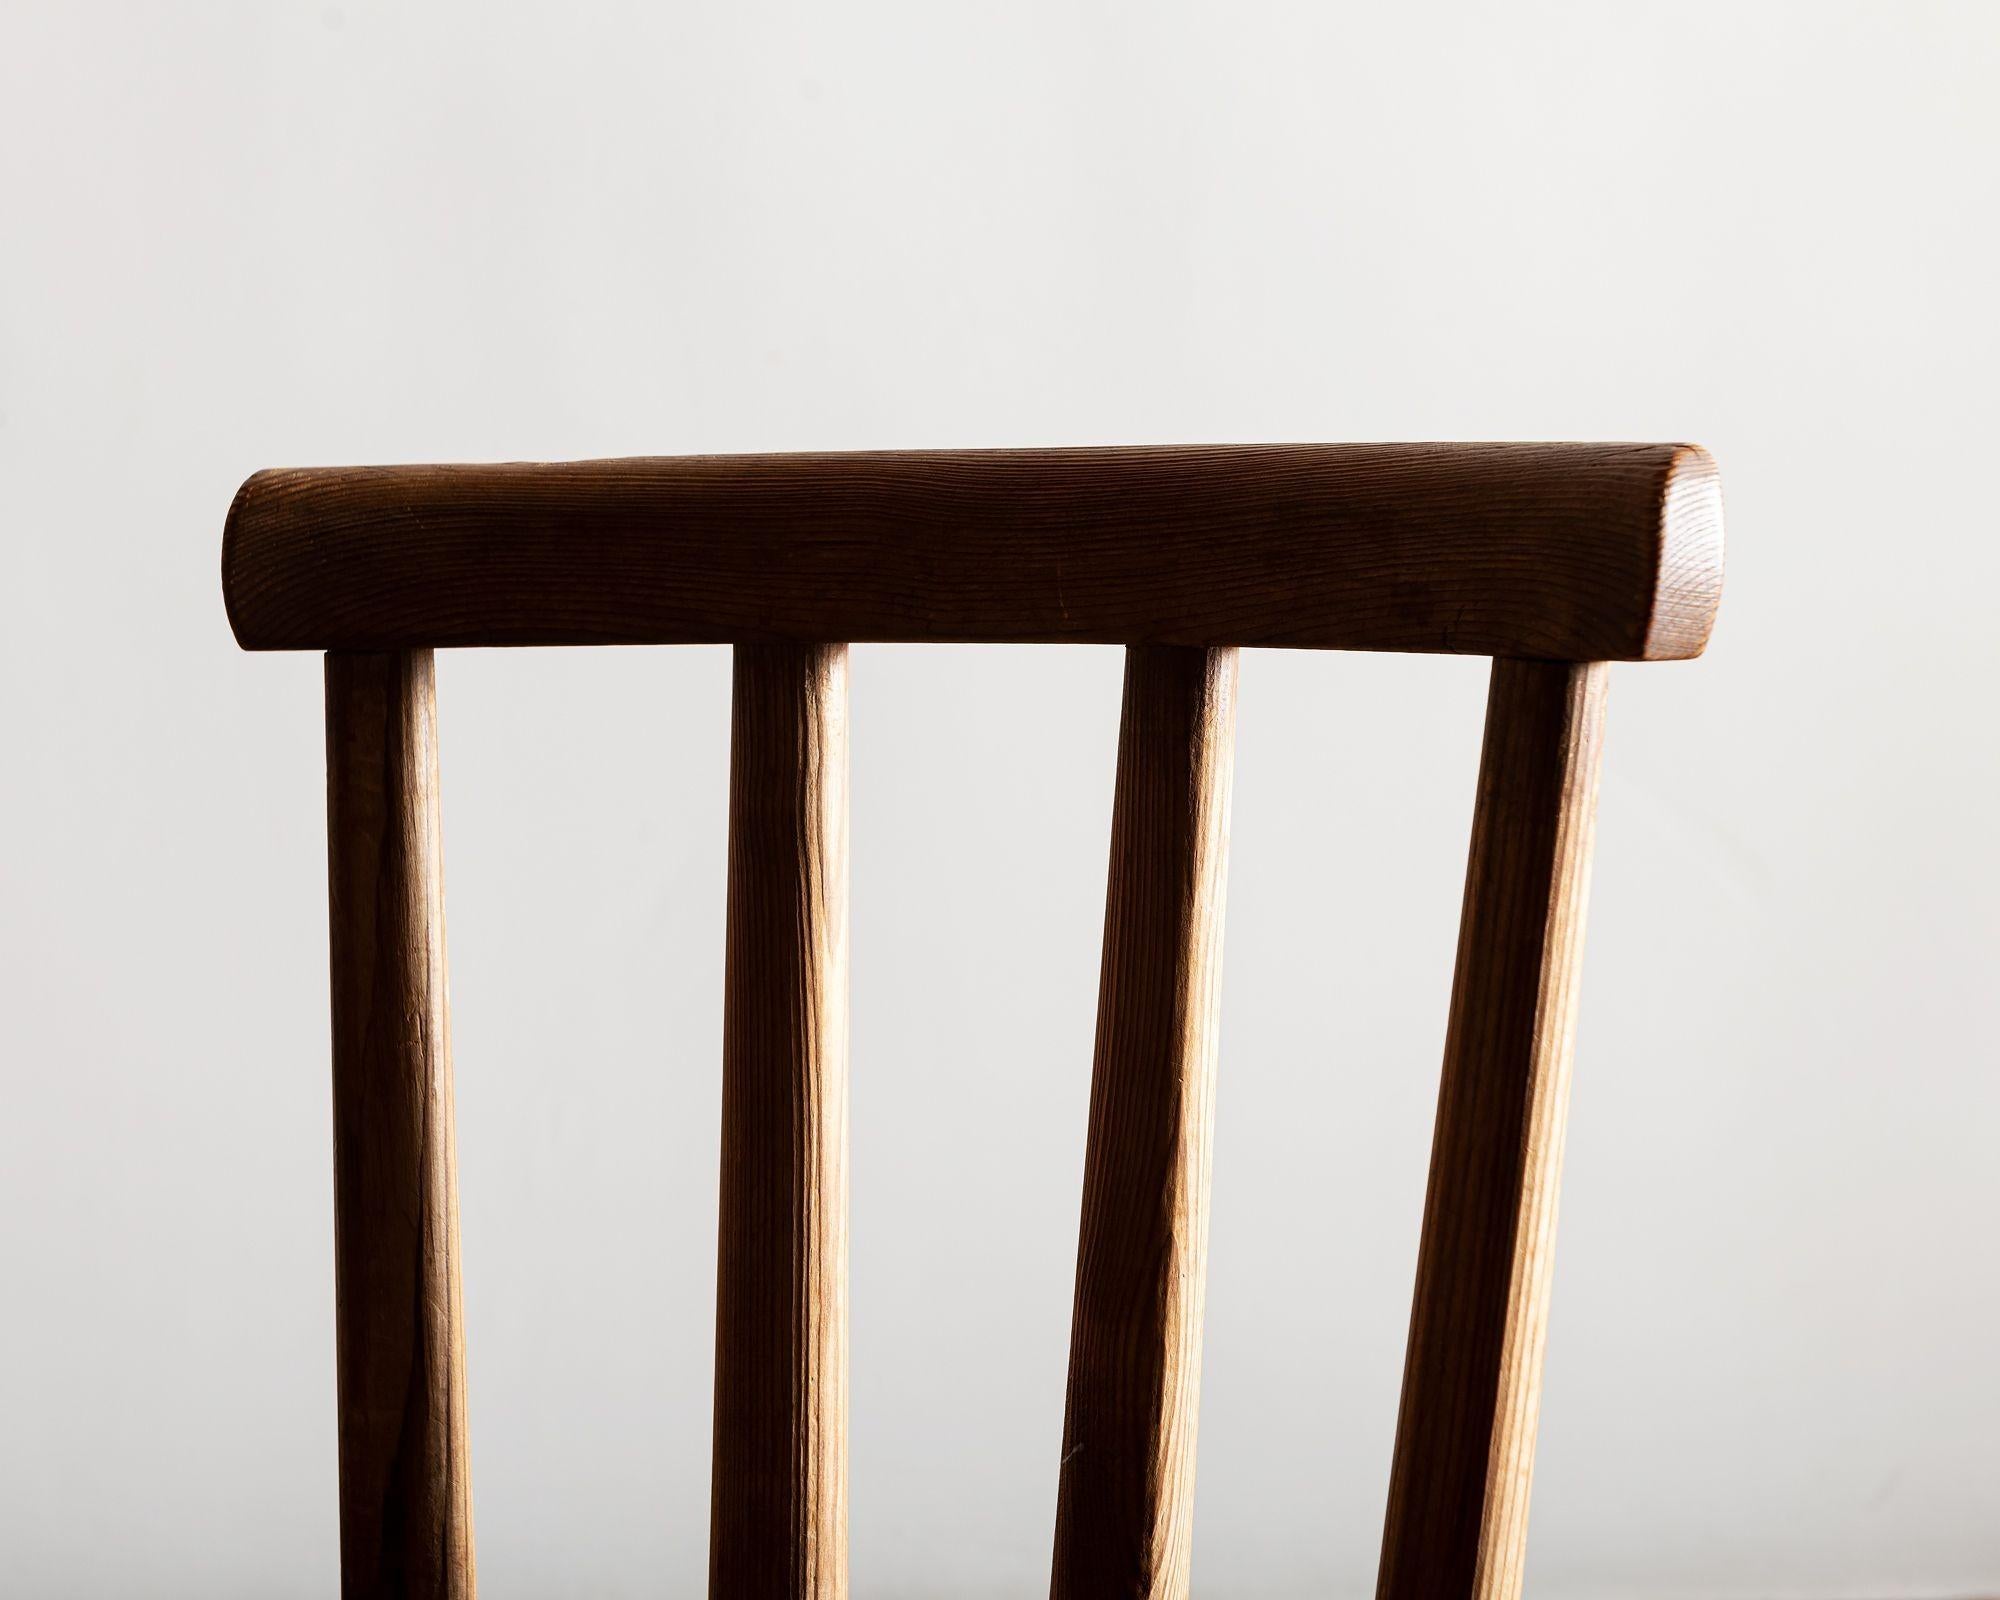 Set of Six Axel Einar Hjorth Utö Chairs for Nordiska Komanpiet, Sweden, 1932 For Sale 4